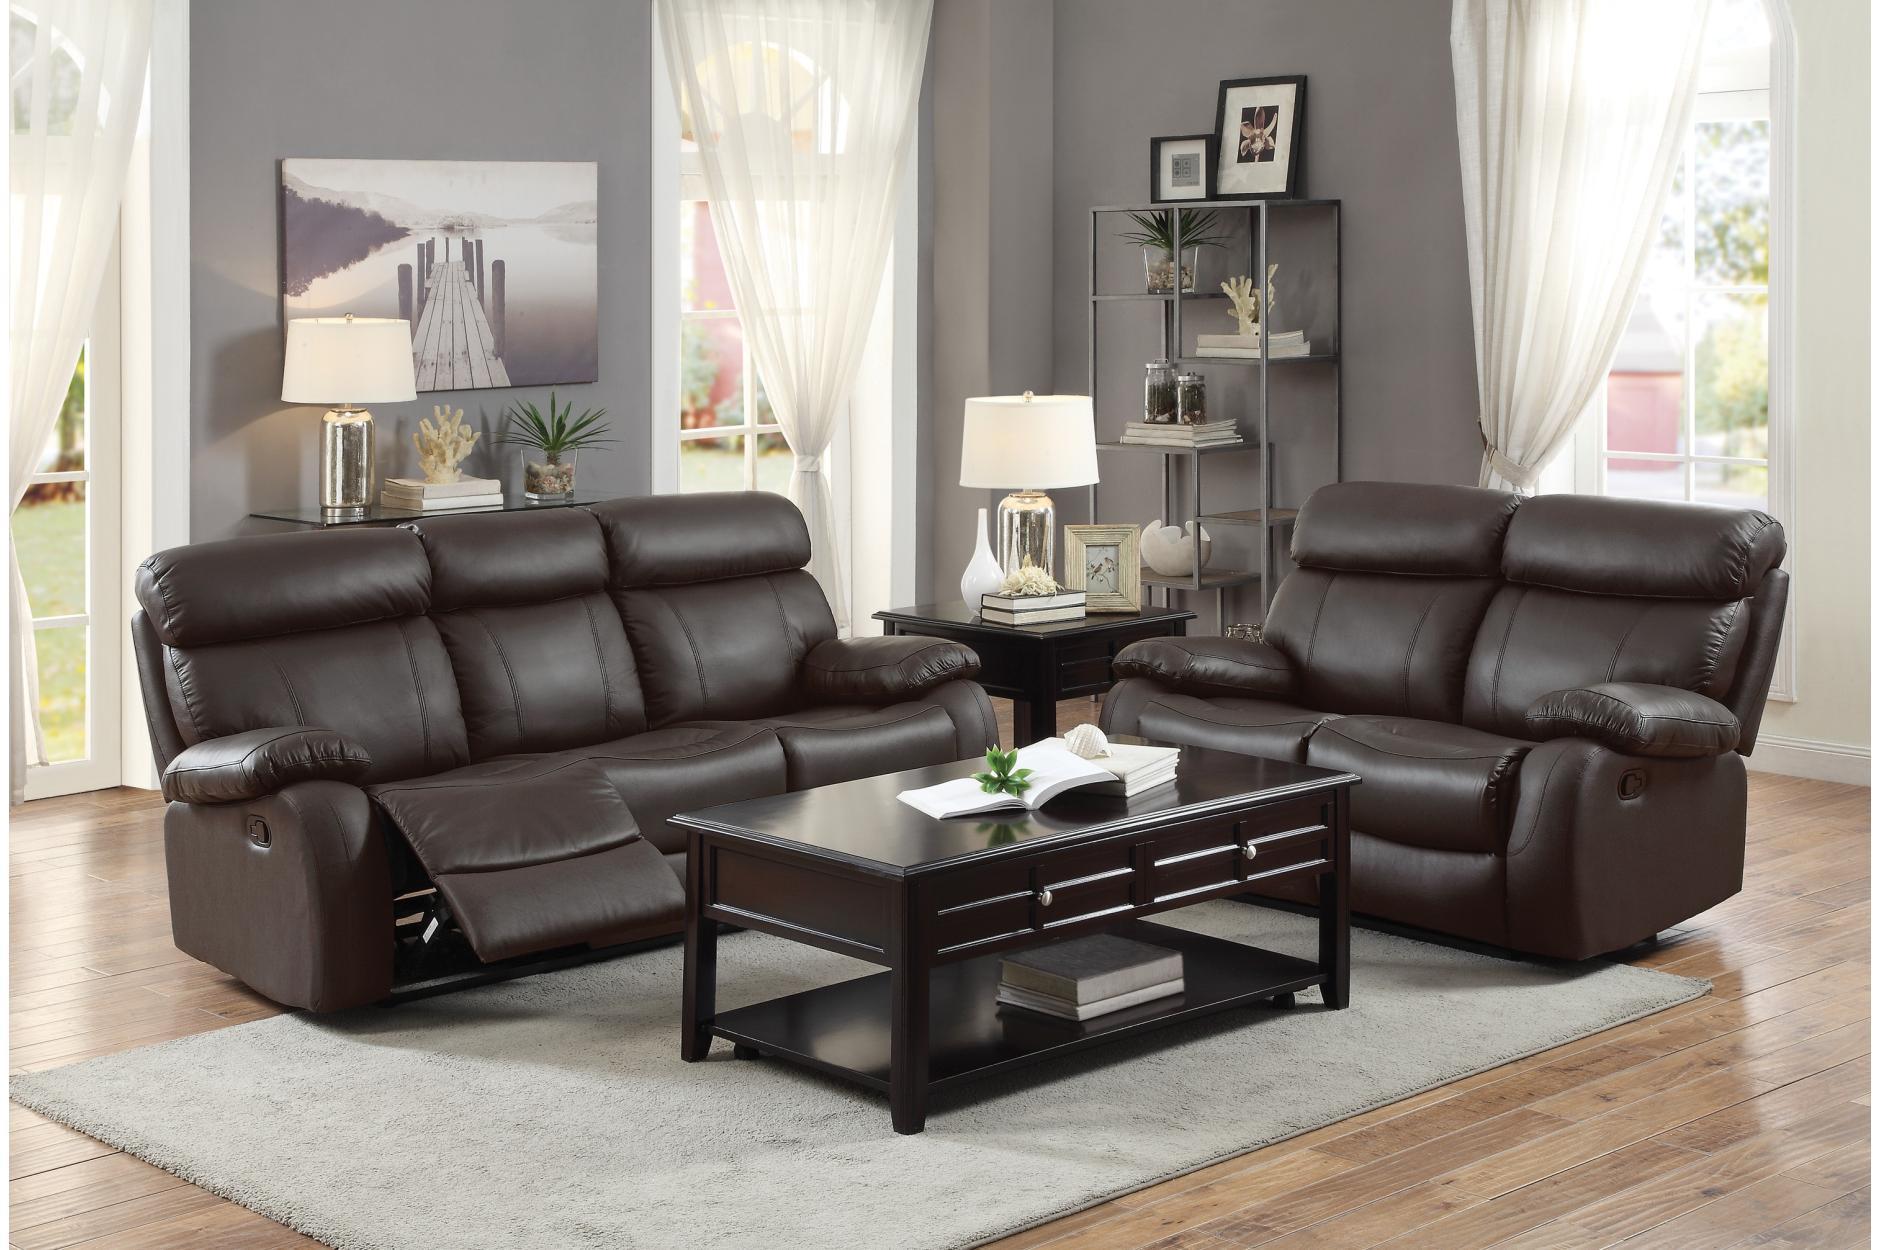 Contemporary, Modern Recliner Sofa Set Pendu 8326BRW-3+2-Set-2 in Brown Top grain leather